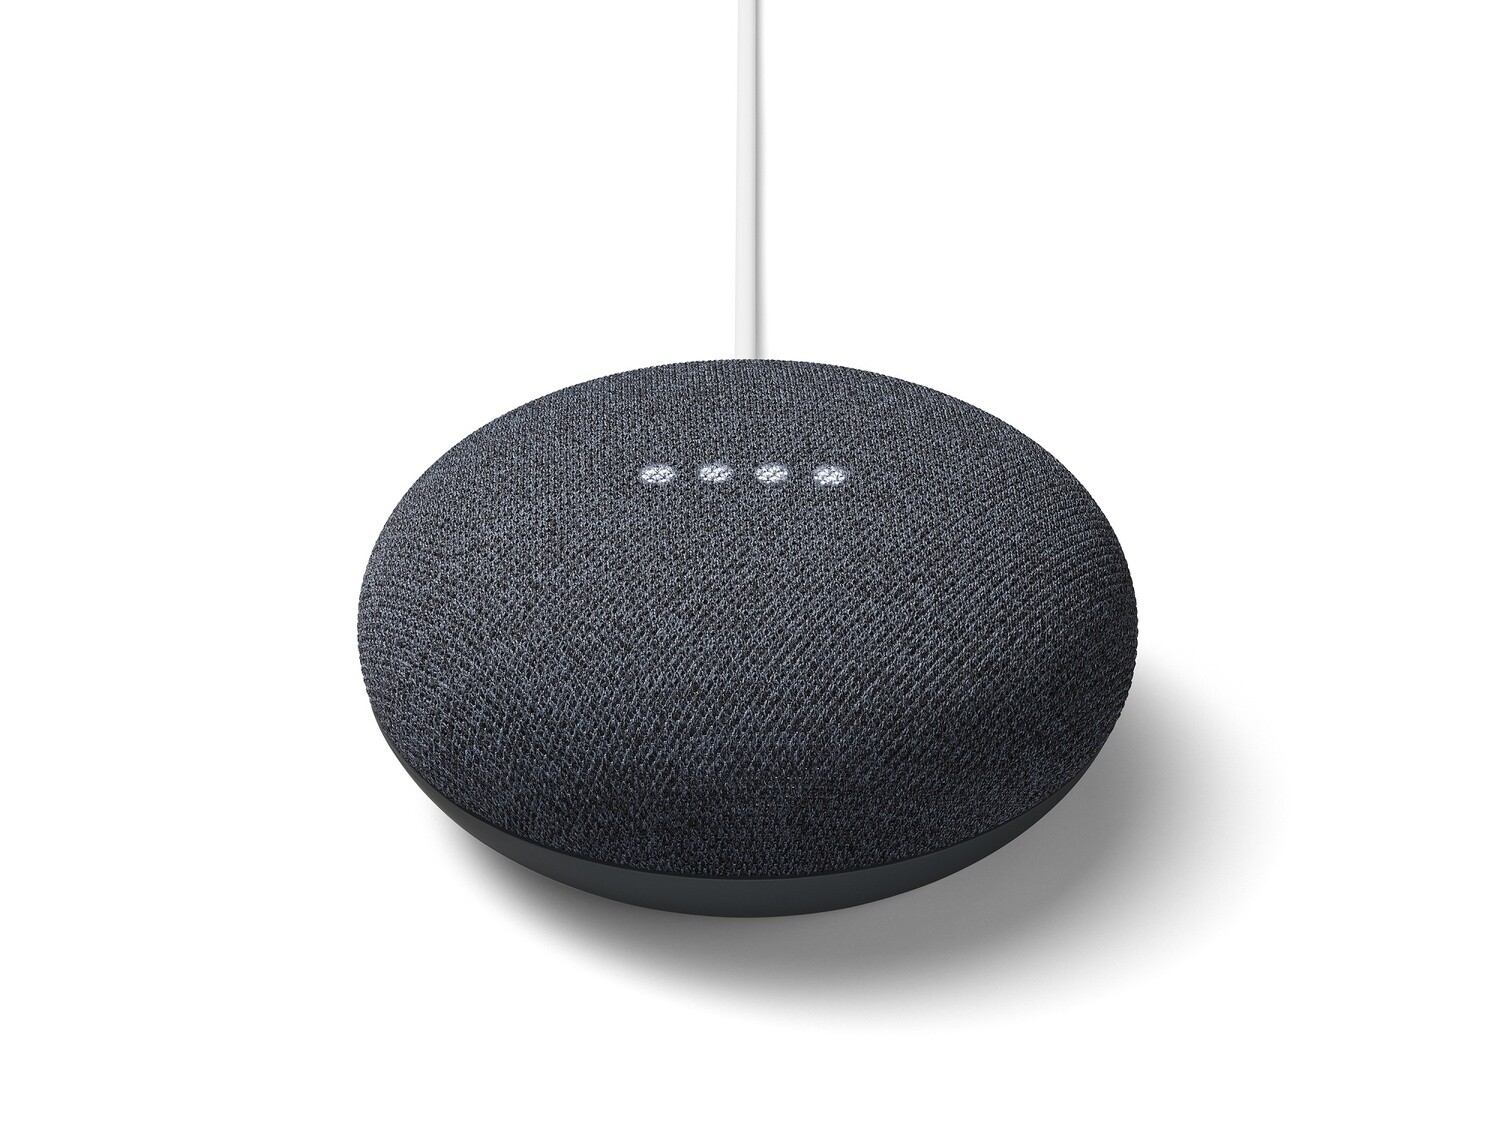 Google Nest Mini 2nd Generation – Smart Speaker with Google Assistant